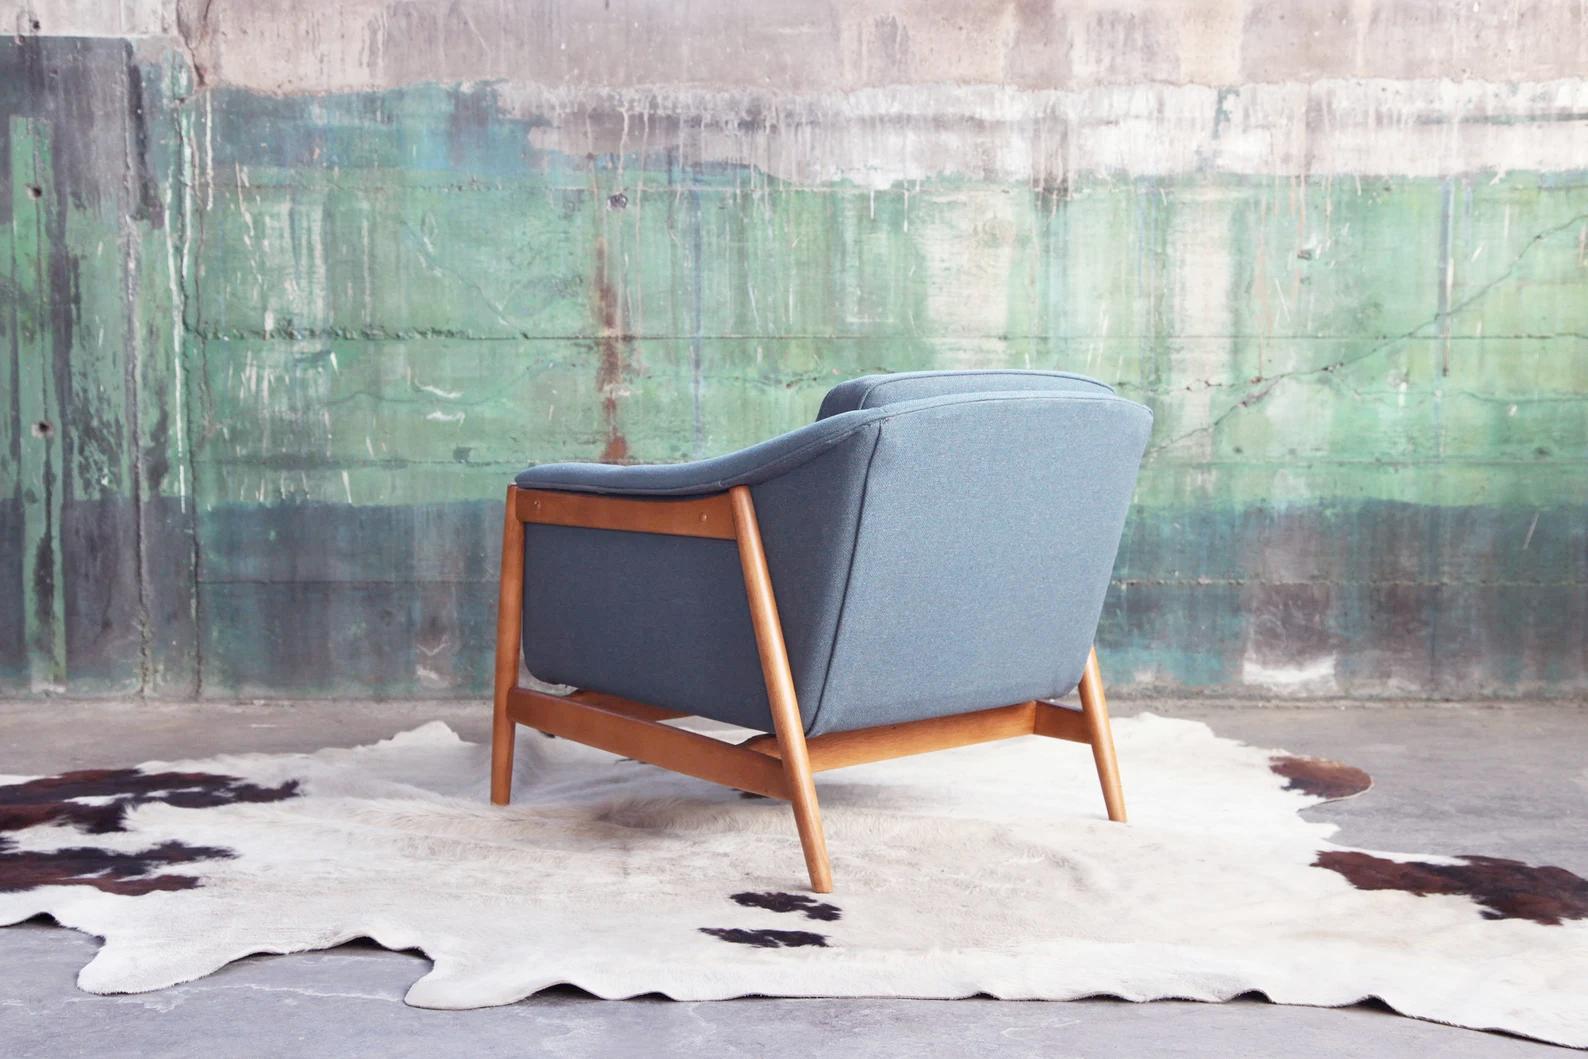 DUX Folke Ohlsson Midcentury Danish Modern Lounge Chair